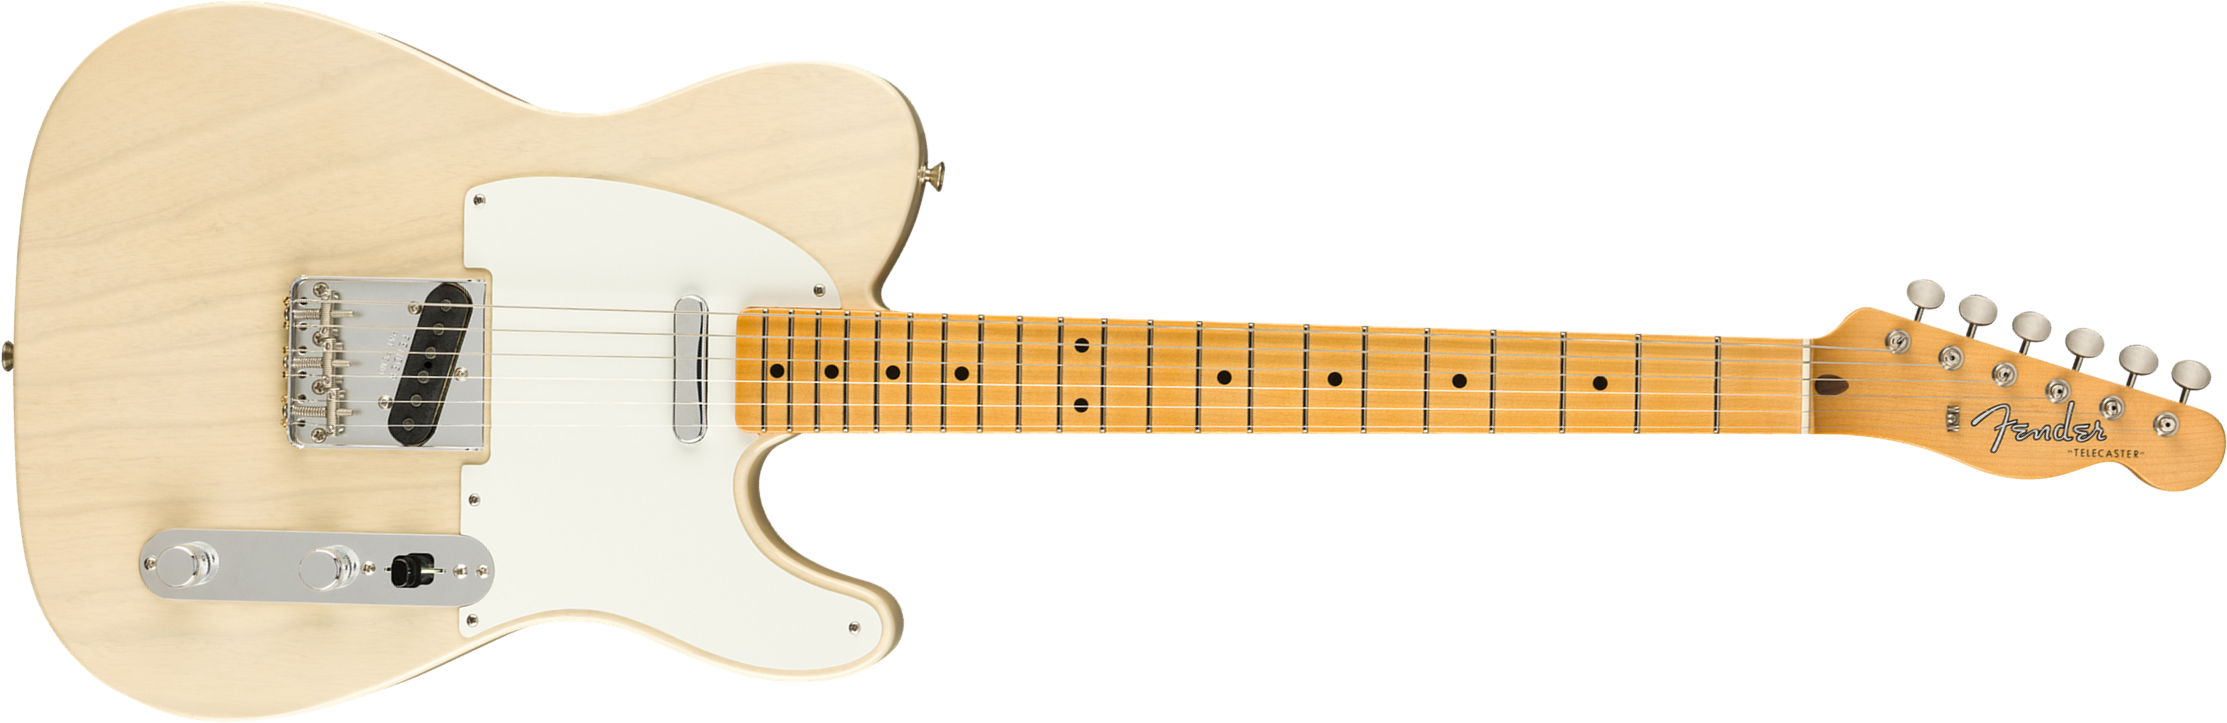 Fender Custom Shop Tele Vintage Custom 1958 Top Load Ltd Mn - Nos Aged White Blonde - Tel shape electric guitar - Main picture